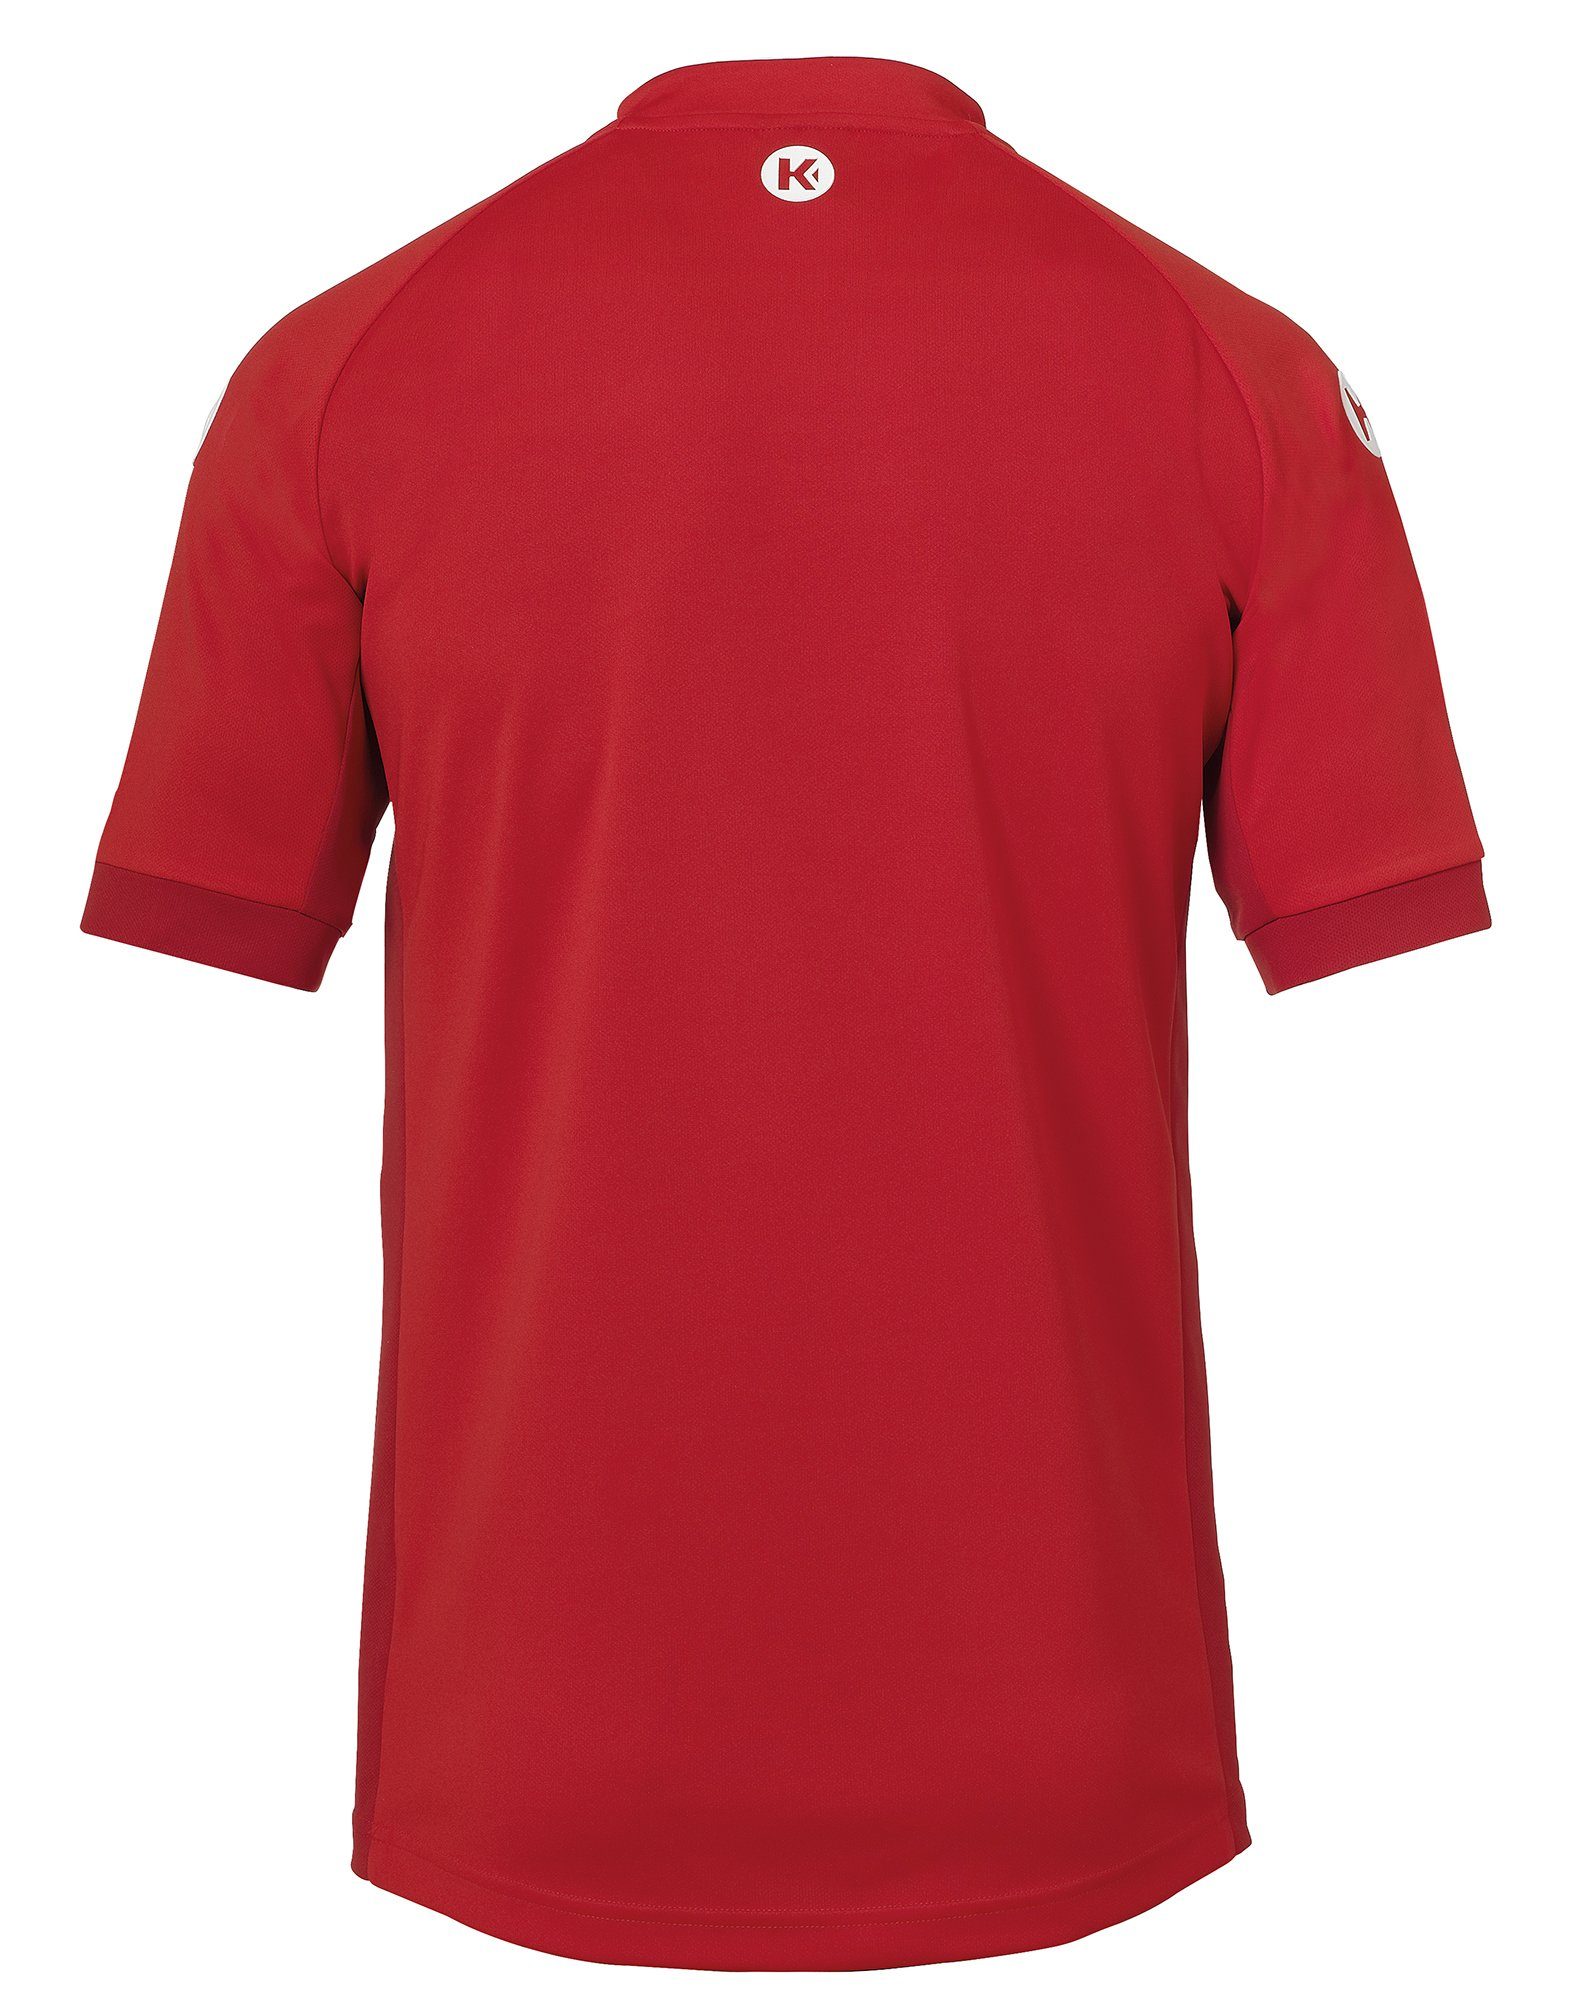 TRIKOT schnelltrocknend Kempa PRIME Trainingsshirt Shirt Kempa rot/chilirot